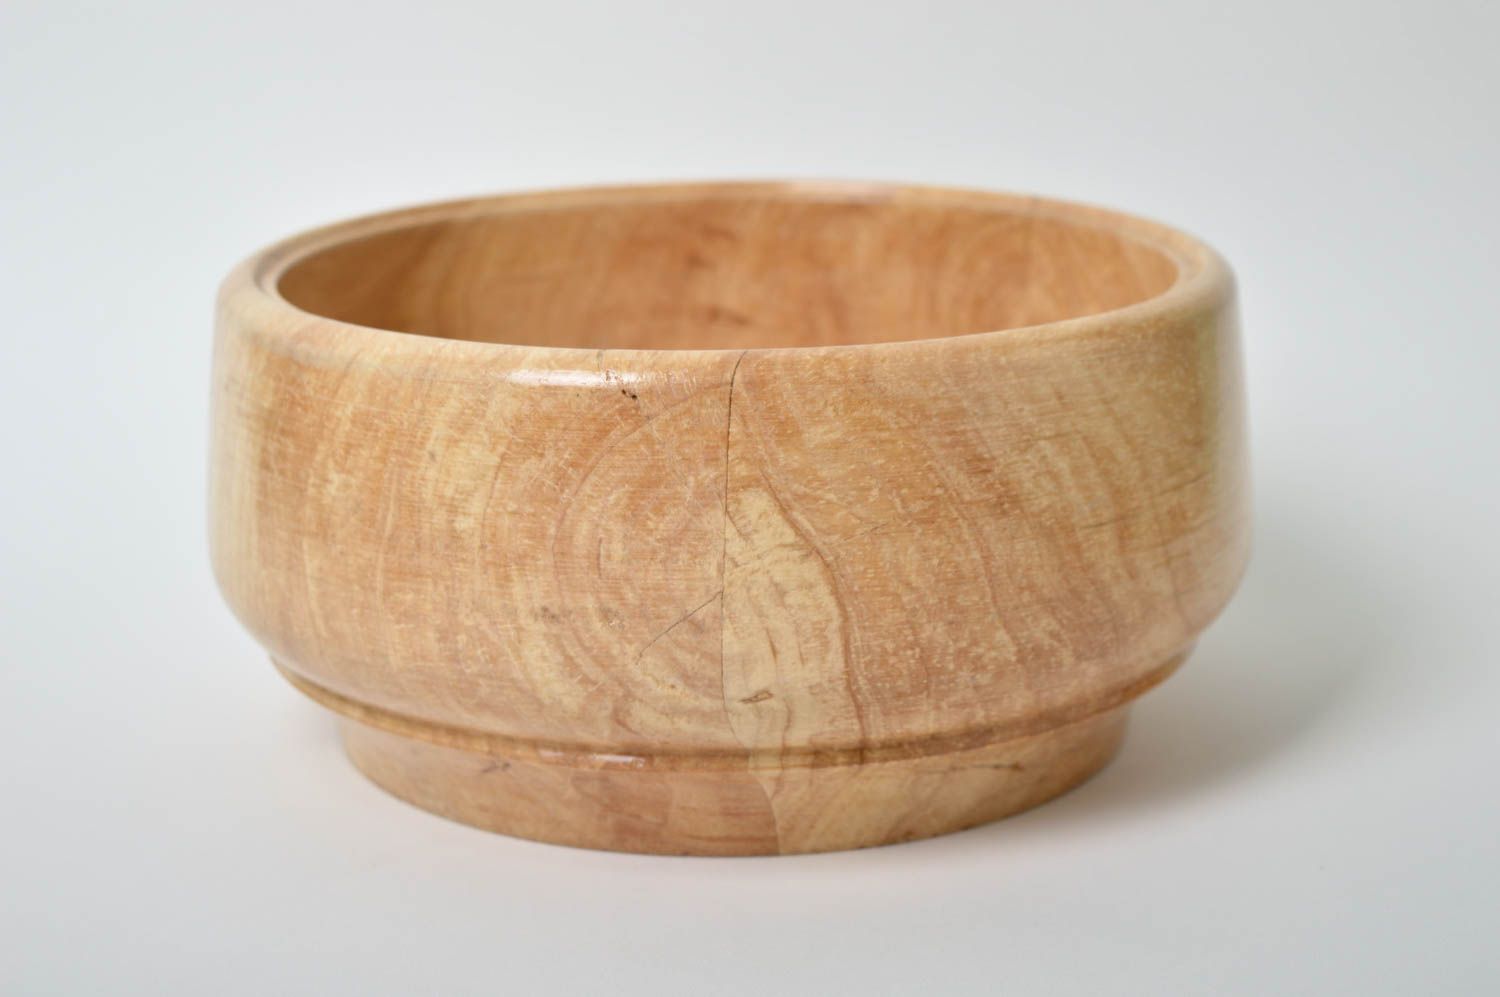 Handmade wooden bowl candy bowl design wood craft kitchen supplies ideas photo 2